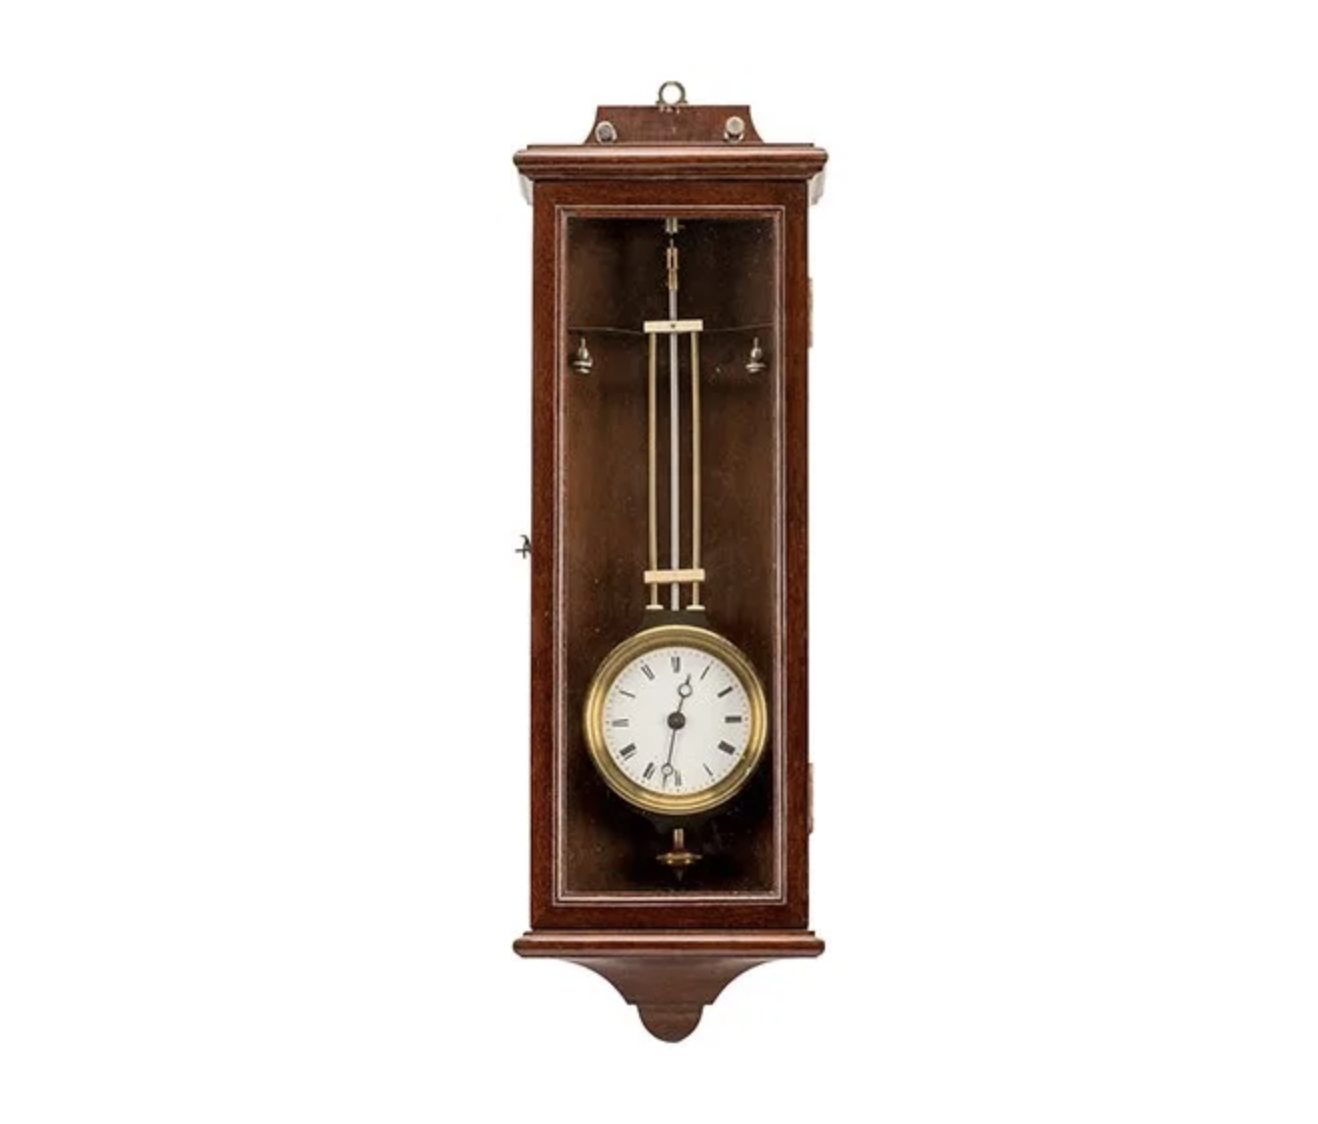 Robert-Houdin Electric Pendulum Clock. French, ca